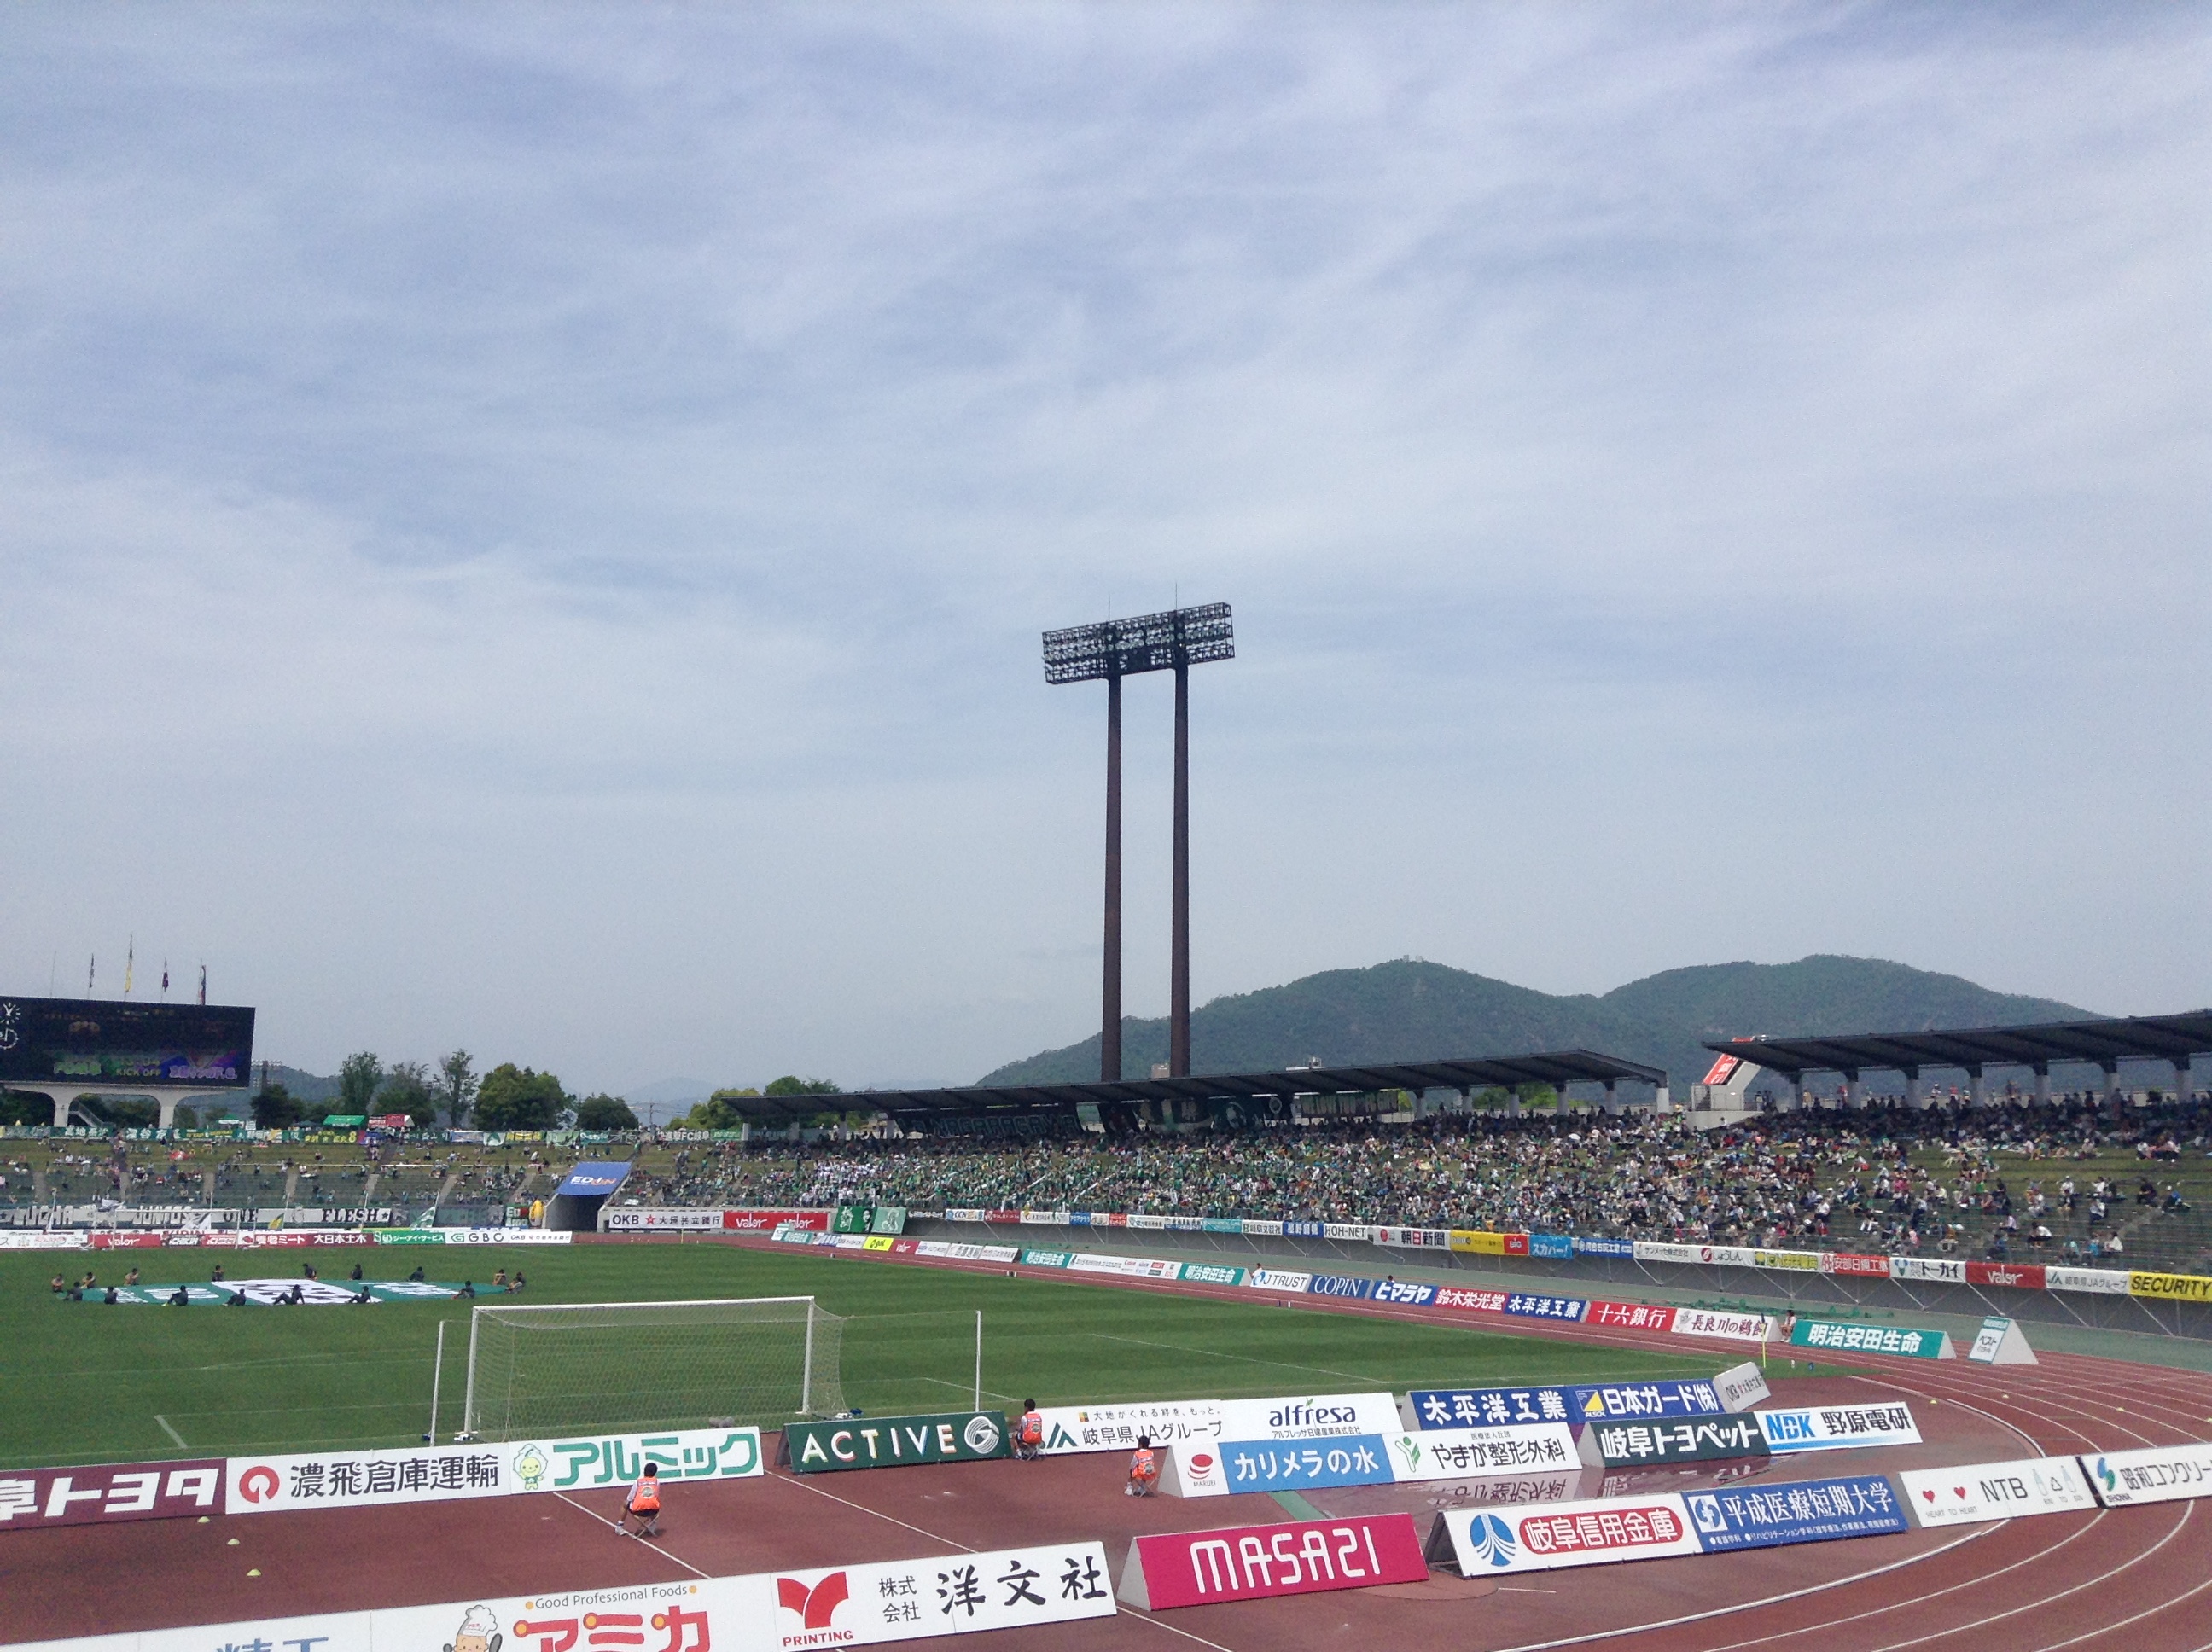 FC岐阜 - Wikipedia